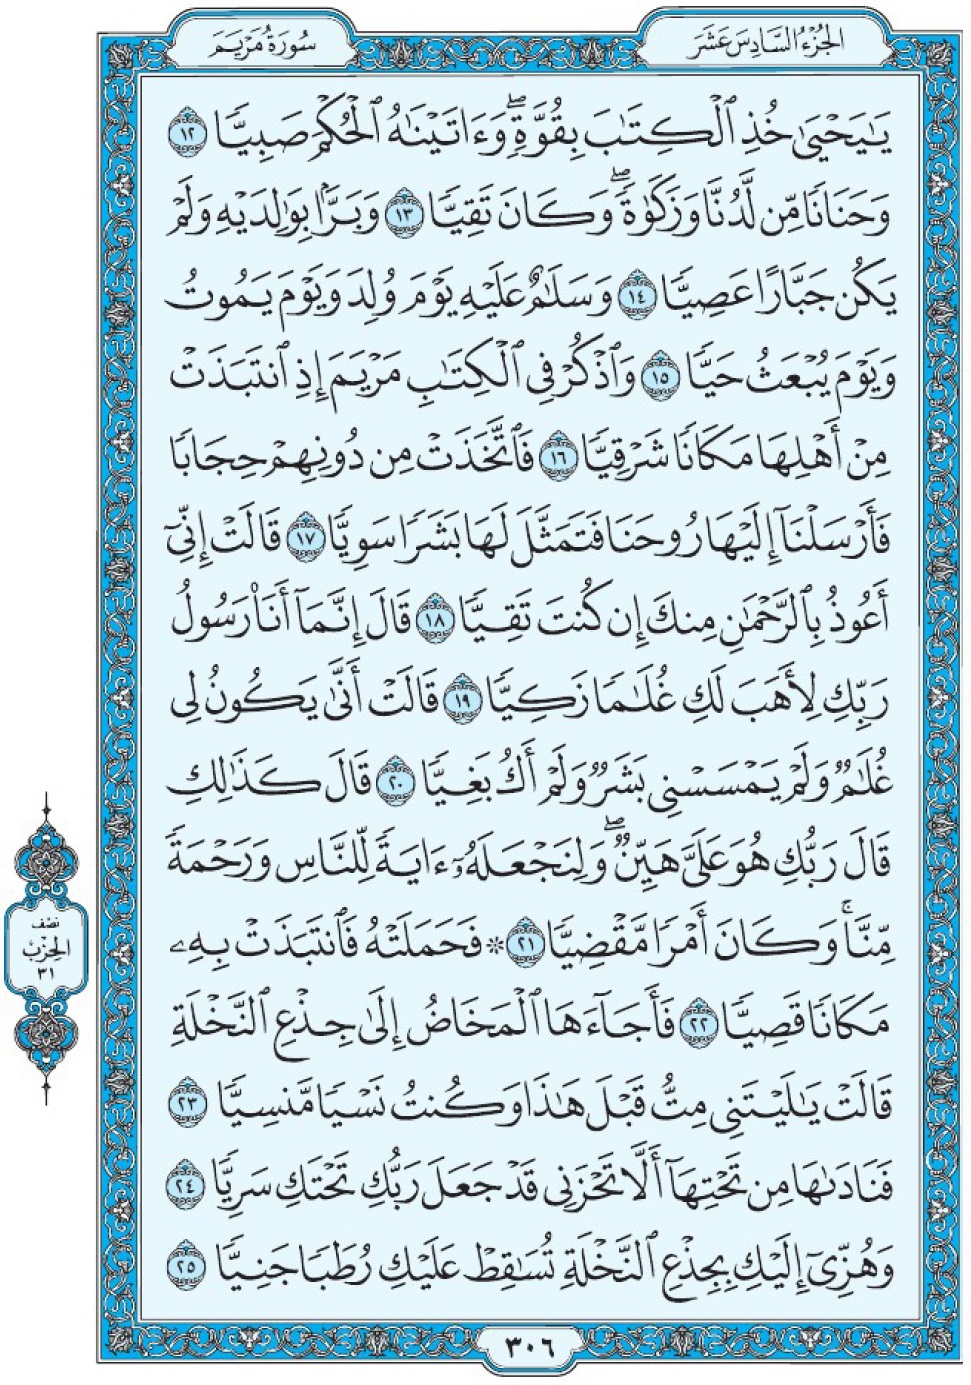 Коран Мединский мусхаф страница 306, Марьям, аят 12-25